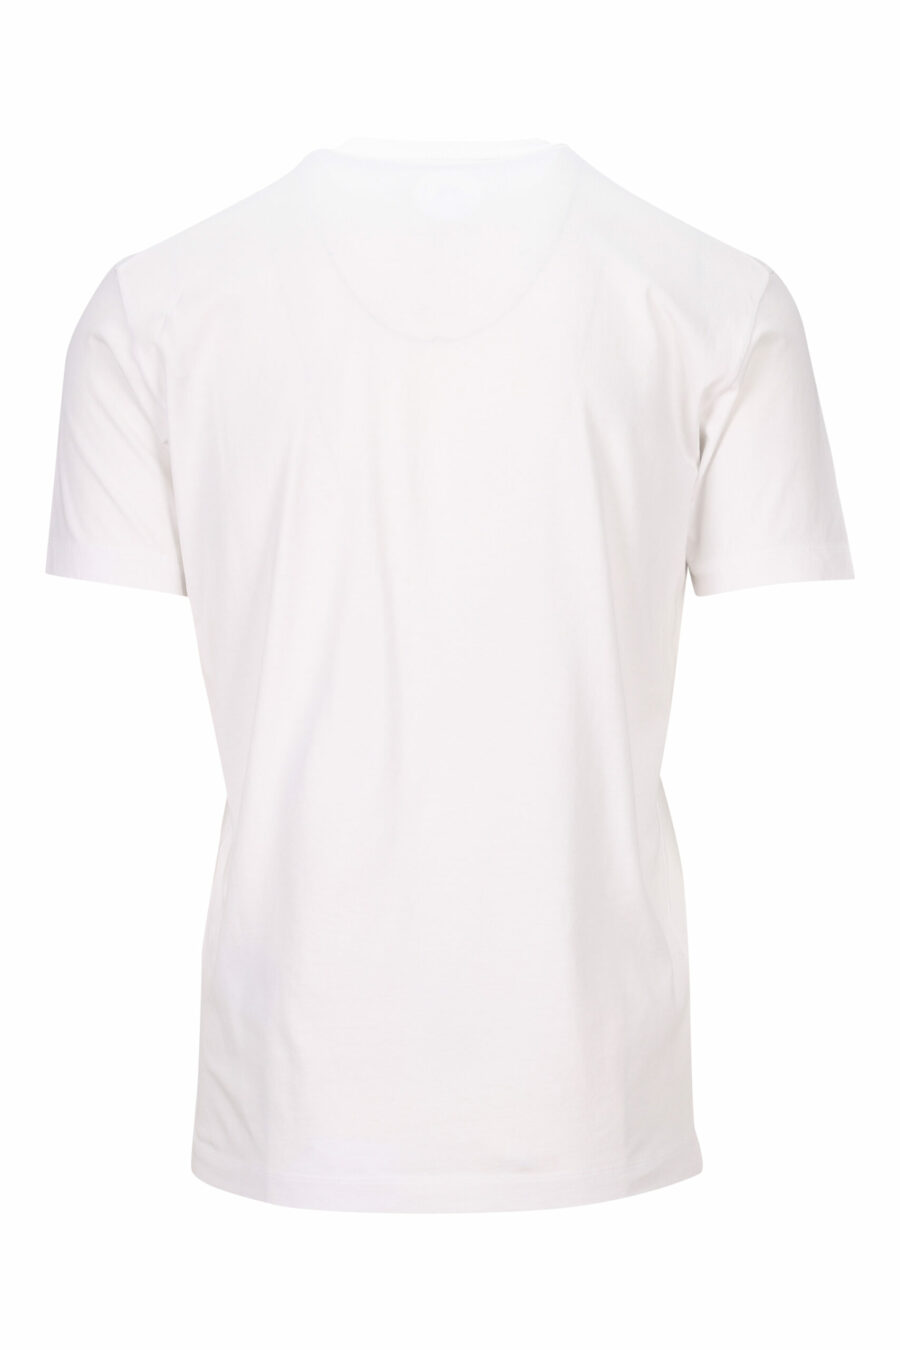 White T-shirt with black "suburbans" mini-logo - 8054148512842 1 scaled